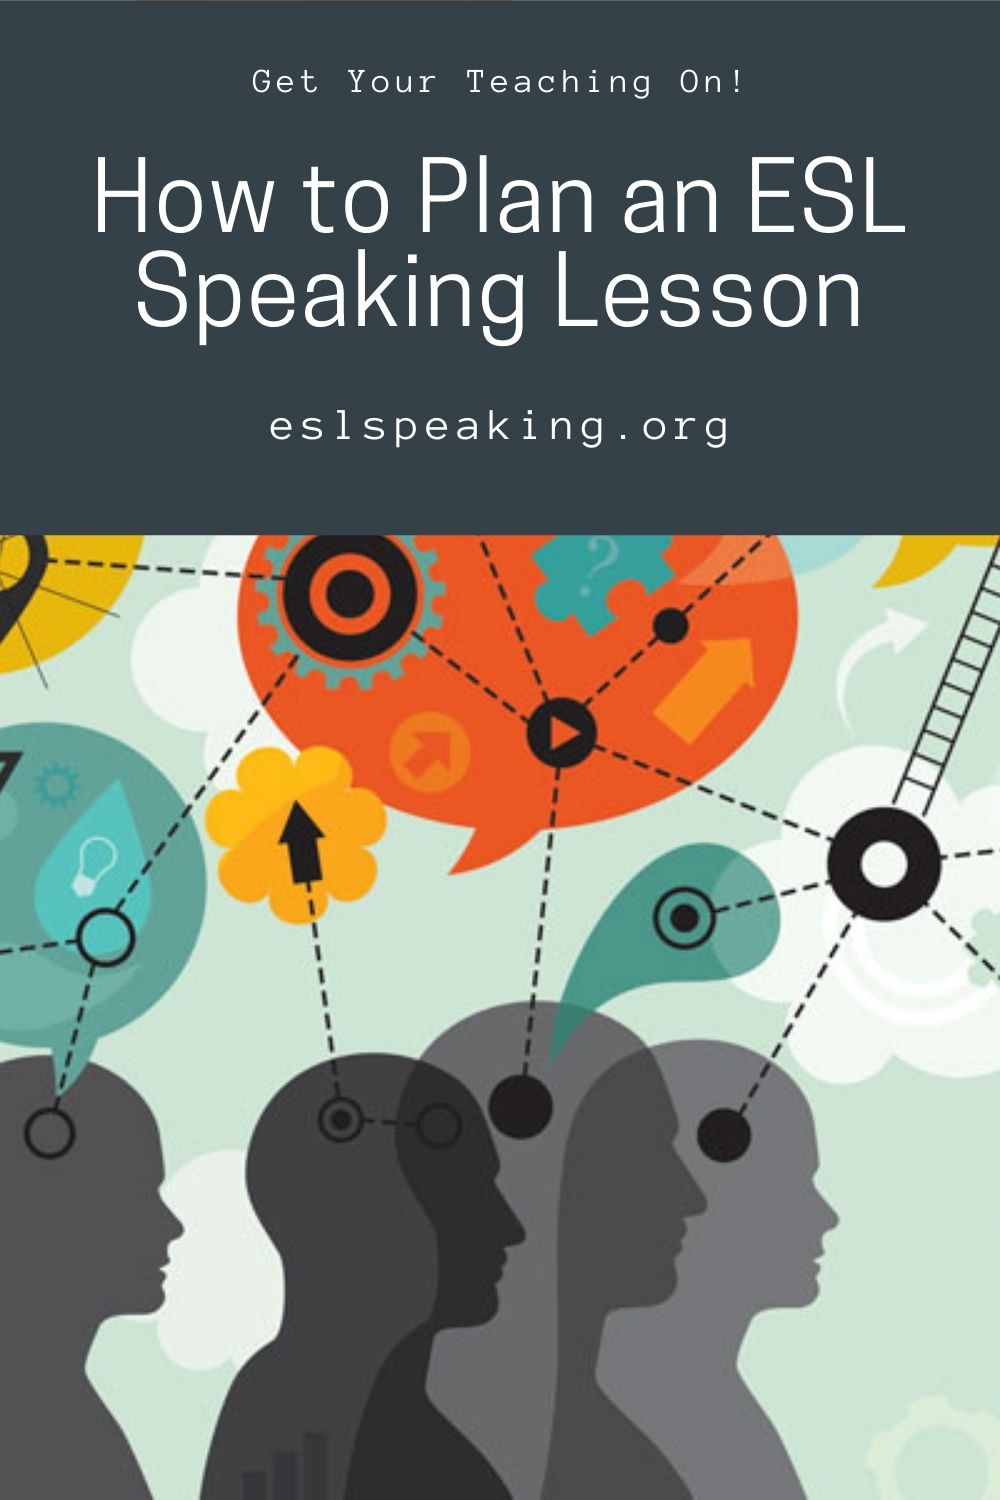 esl-lesson-plan-template-teach-advanced-esl-convo-classes